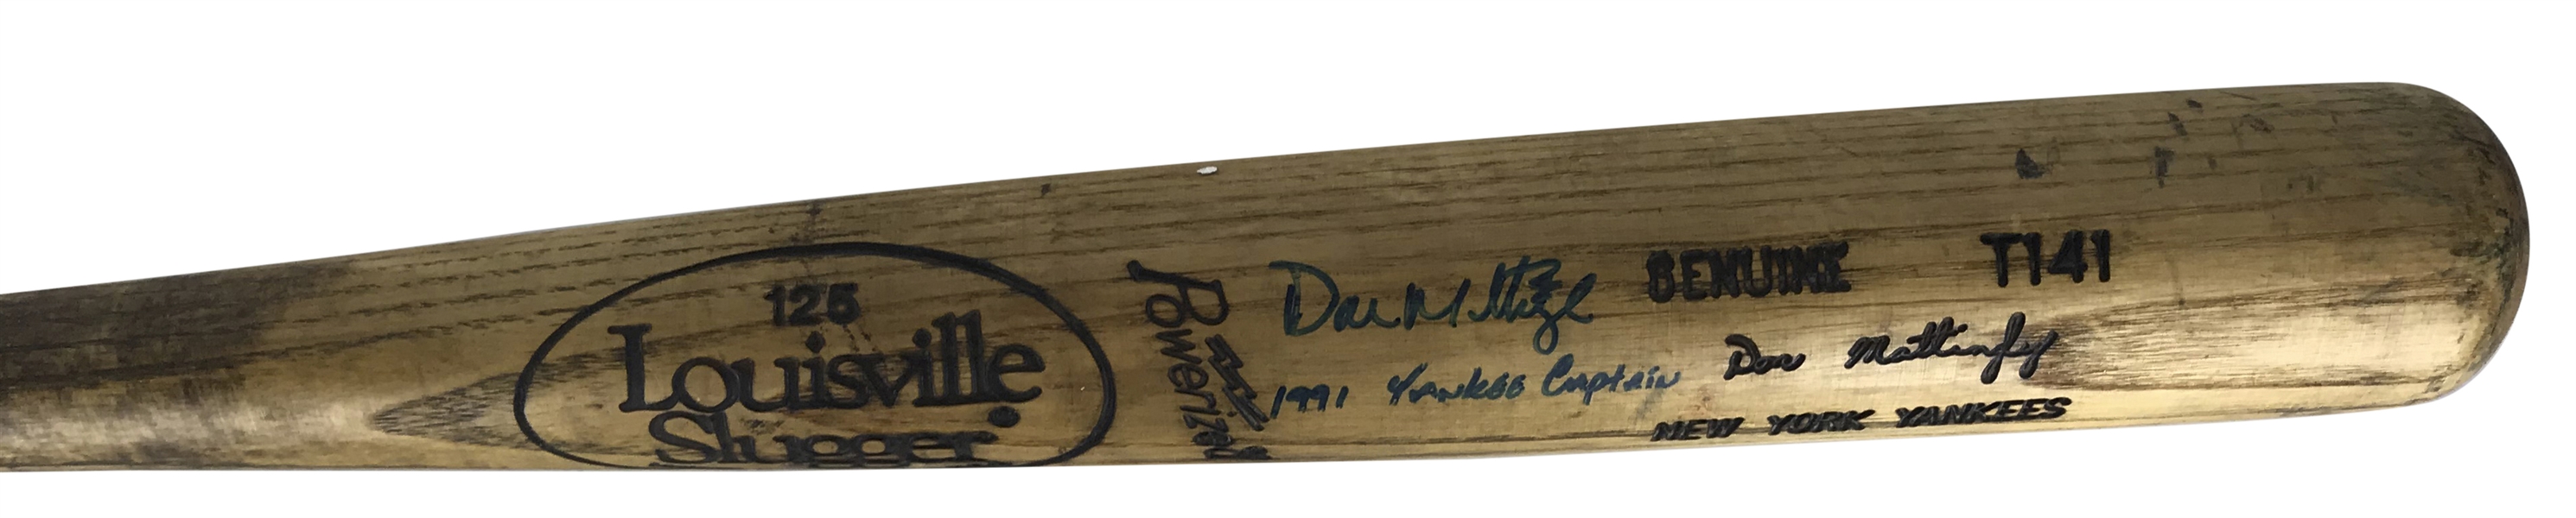 Don Mattingly Signed & Game Used 1991-95 Yankees Baseball Bat -PSA/DNA GU 10!